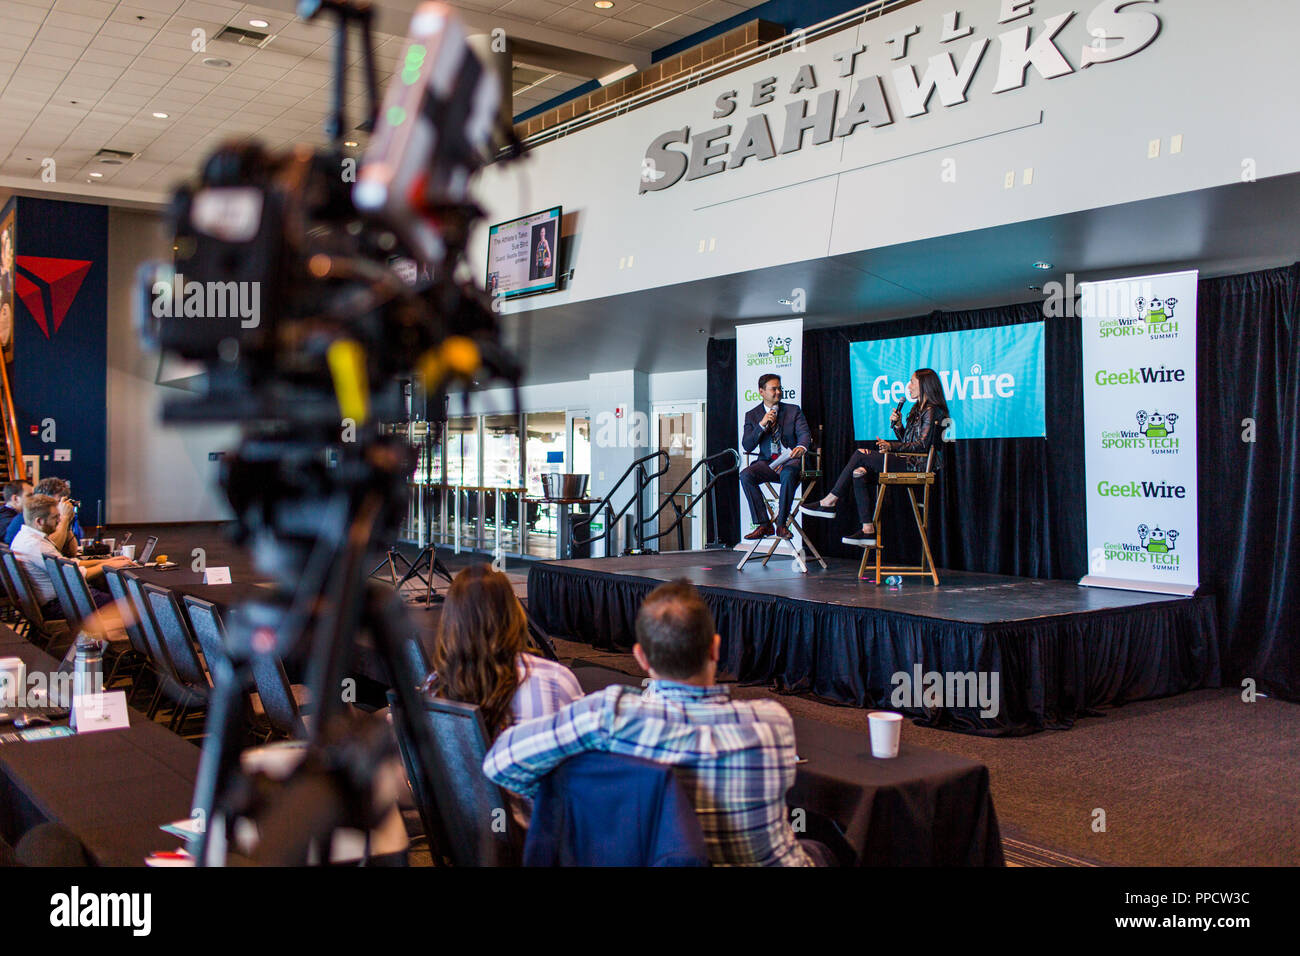 Male journalist interviewing female athlete on stage, Seattle, Washington, USA Stock Photo